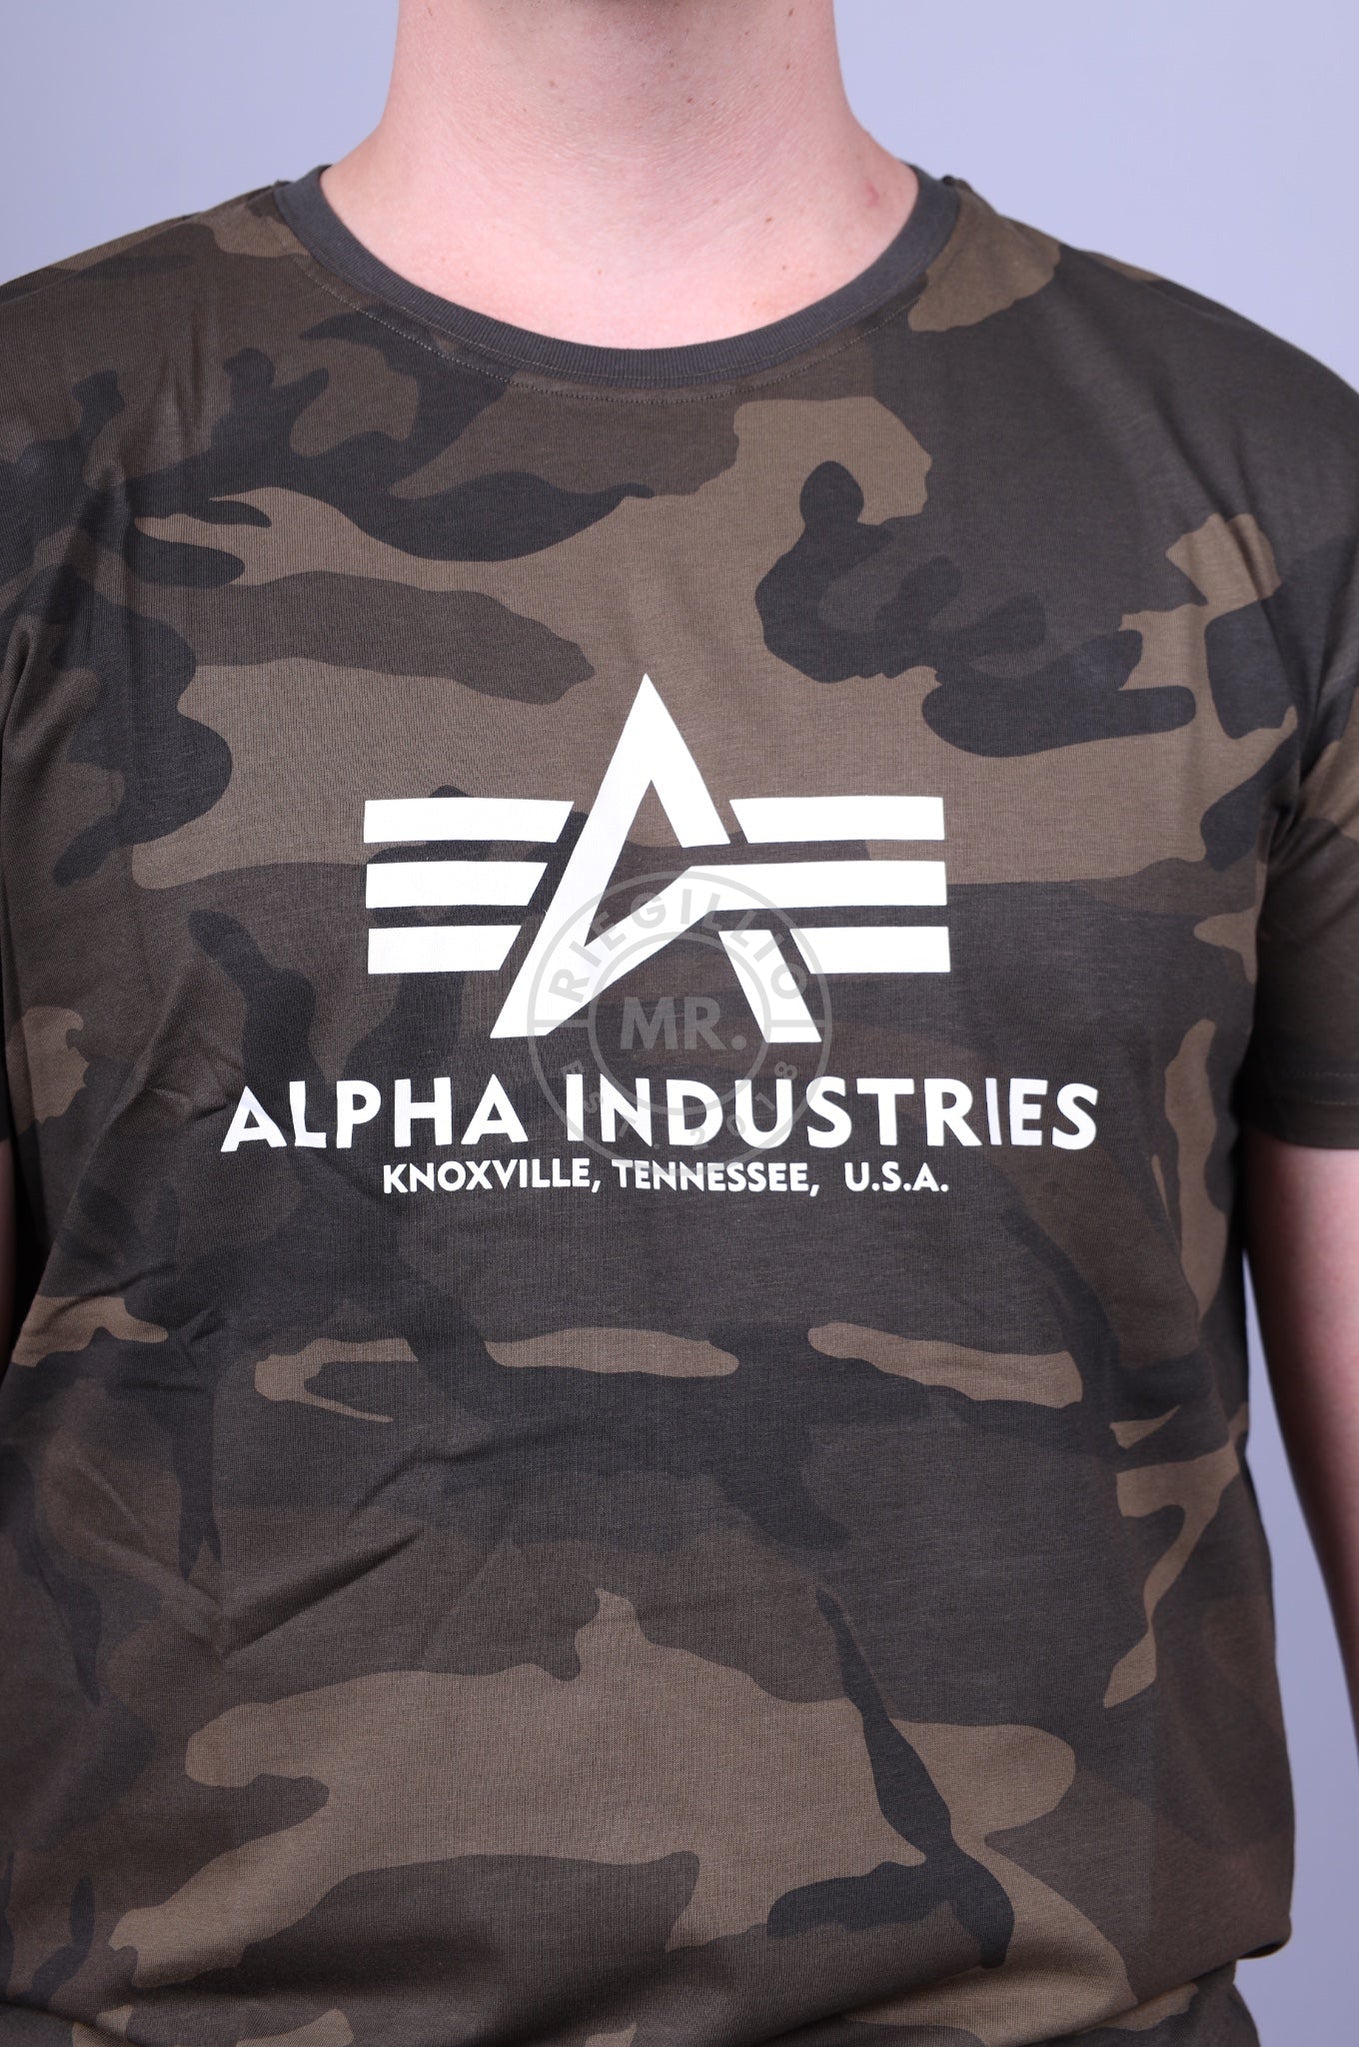 Alpha Industries Basic T-Shirt Olive Camo-at MR. Riegillio